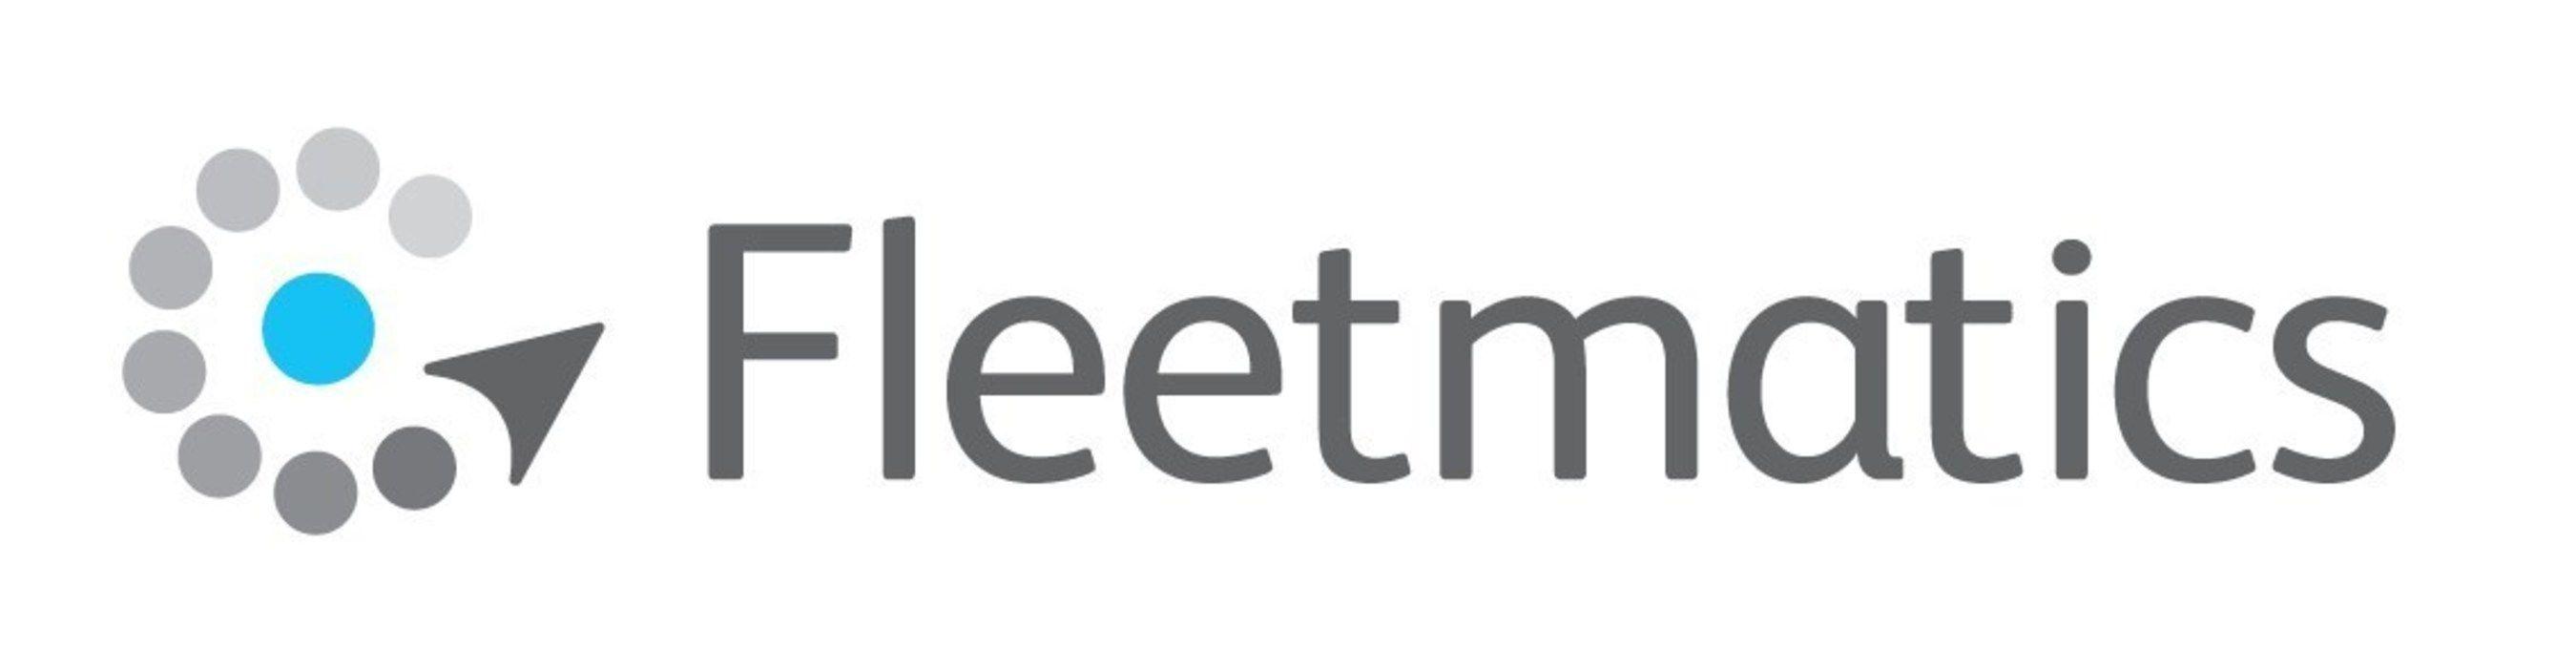 American Technology Company Logo - Fleetmatics Ranked Top Fleet Management Software Company in North